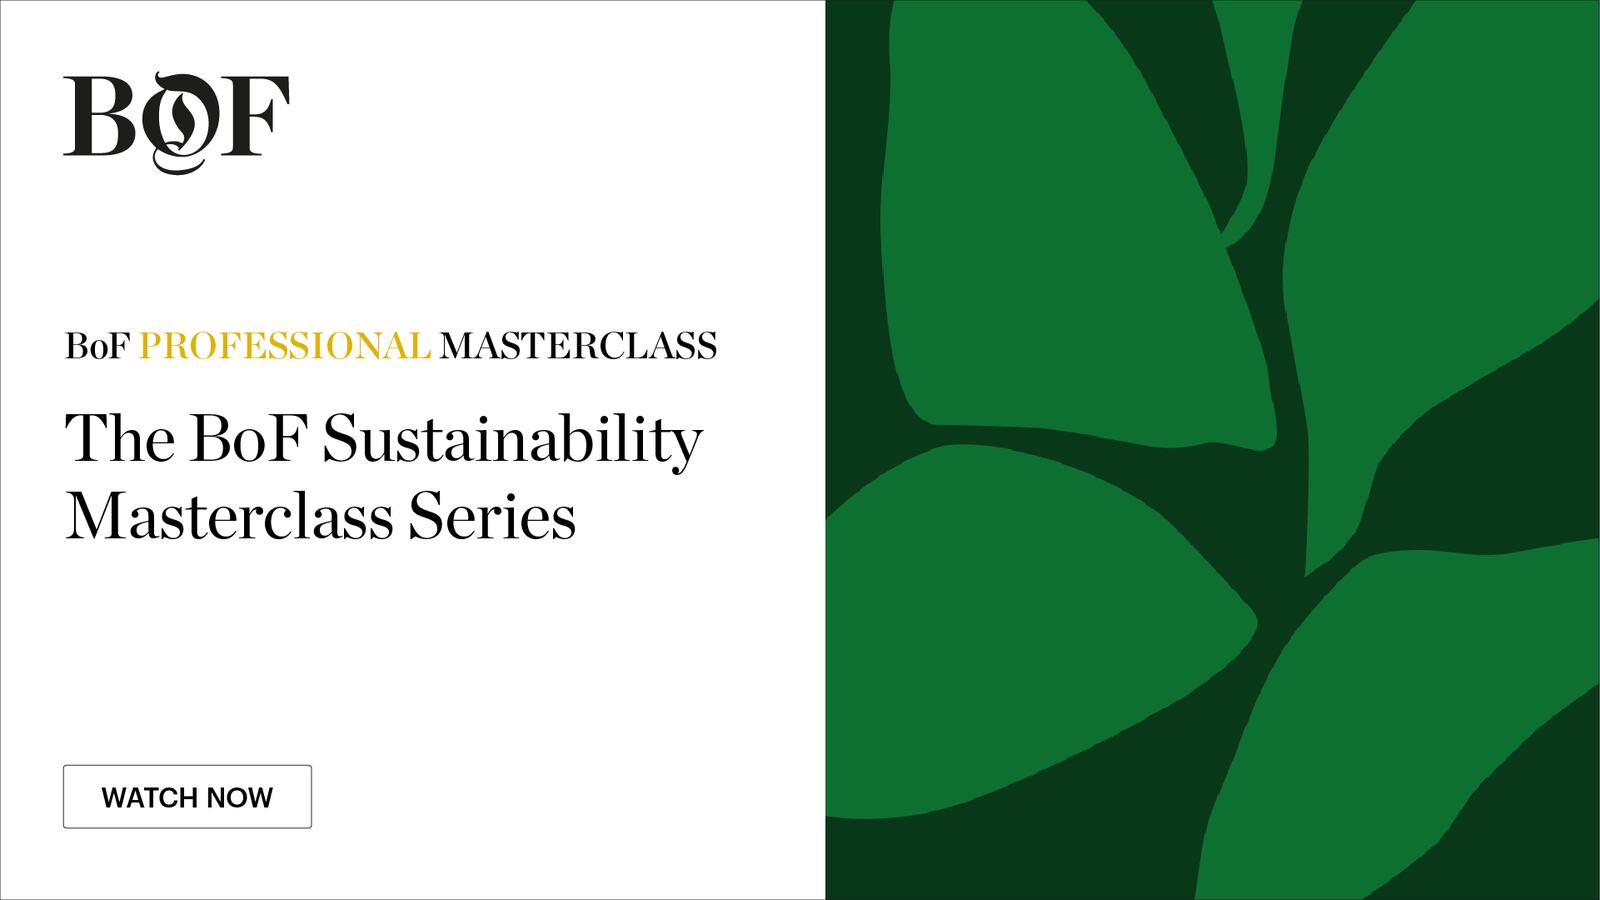 BoF Professional Masterclass: The BoF Sustainability Masterclass Series